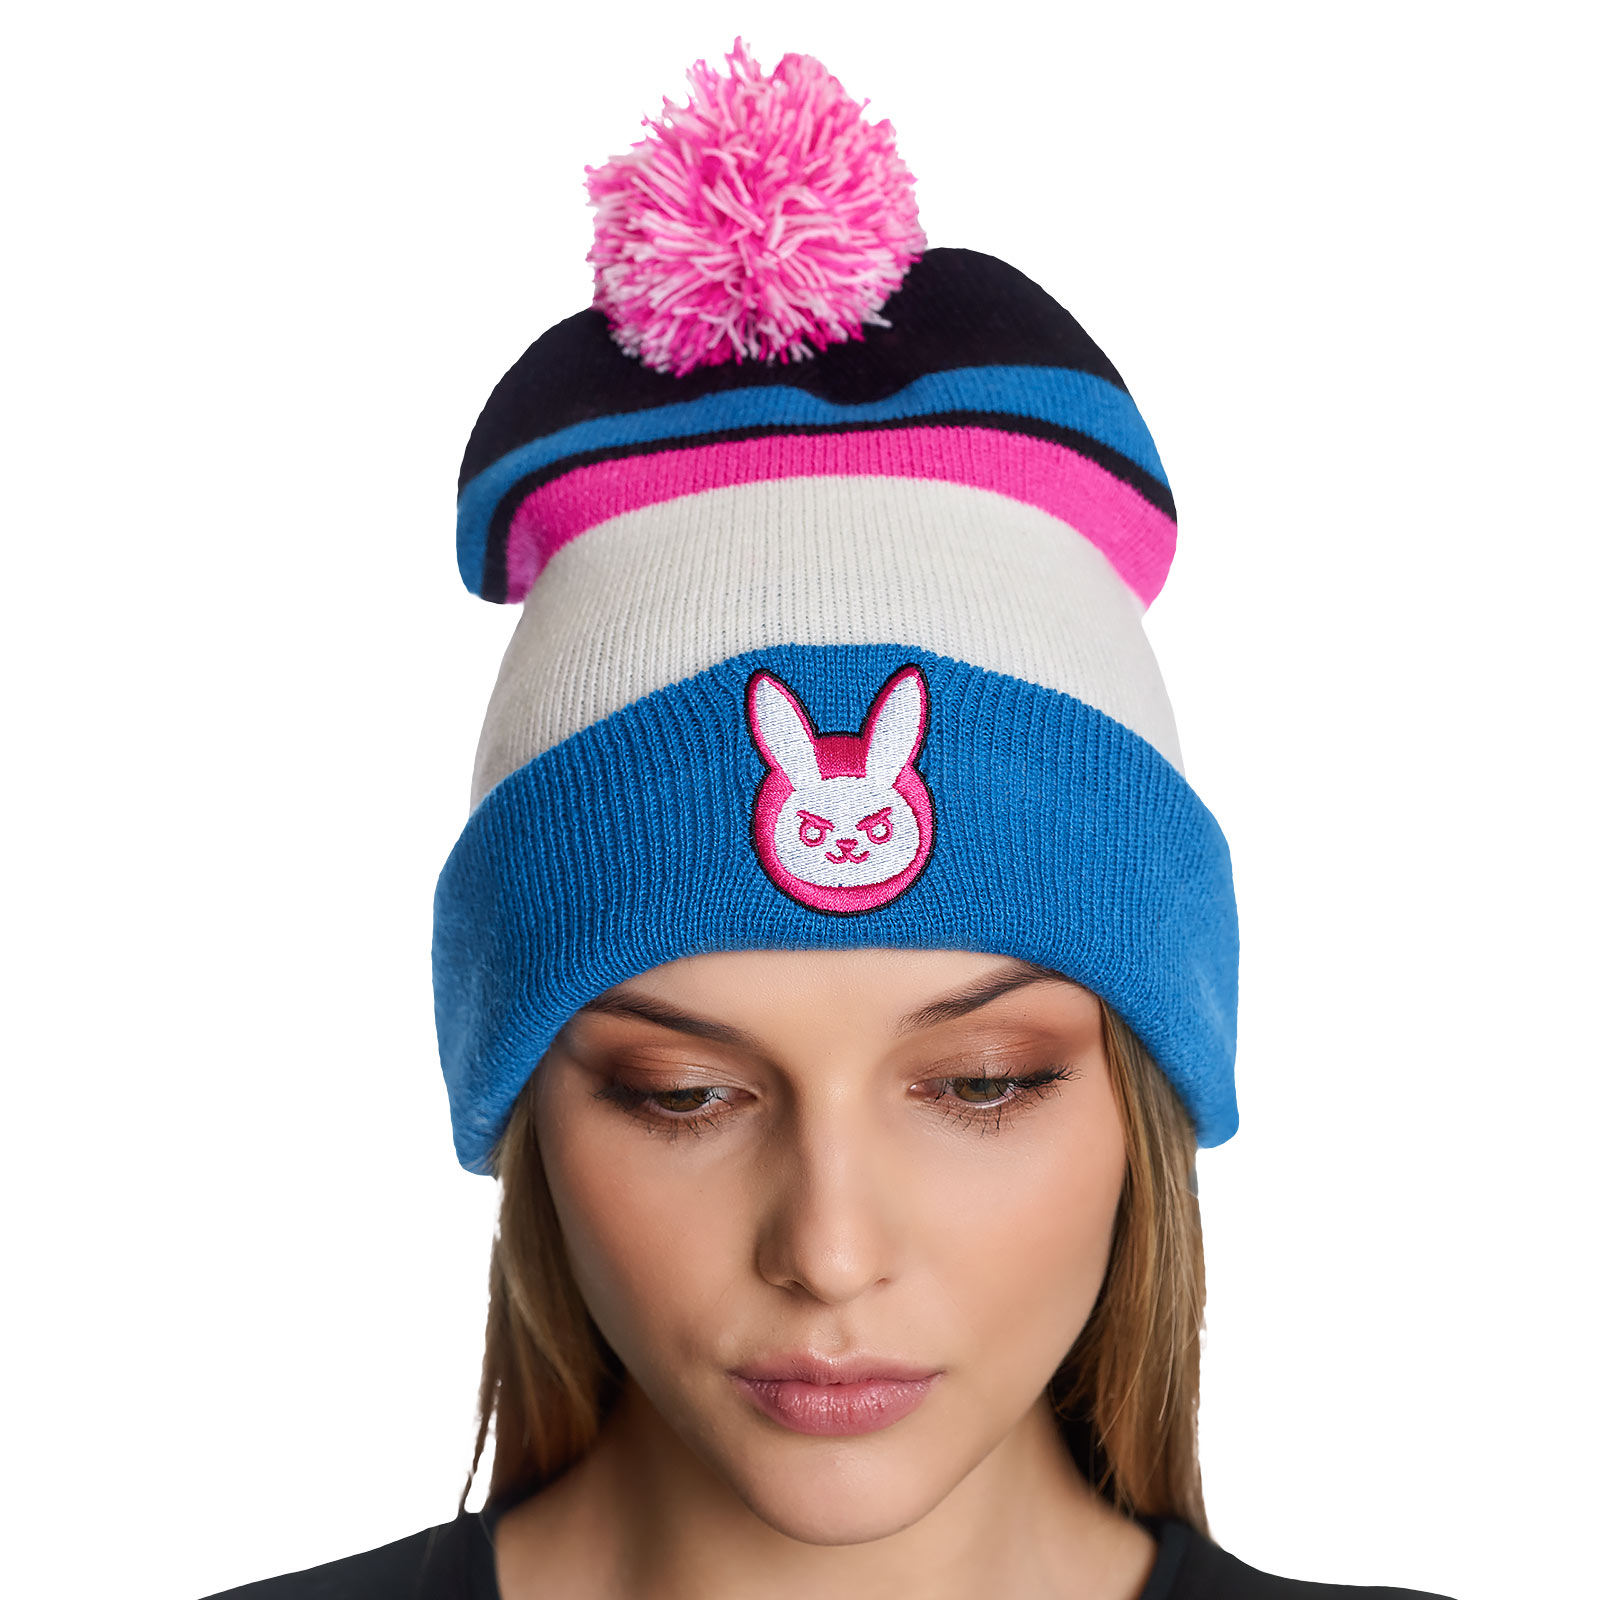 Overwatch - D.VA Bunny Hat with Pompom